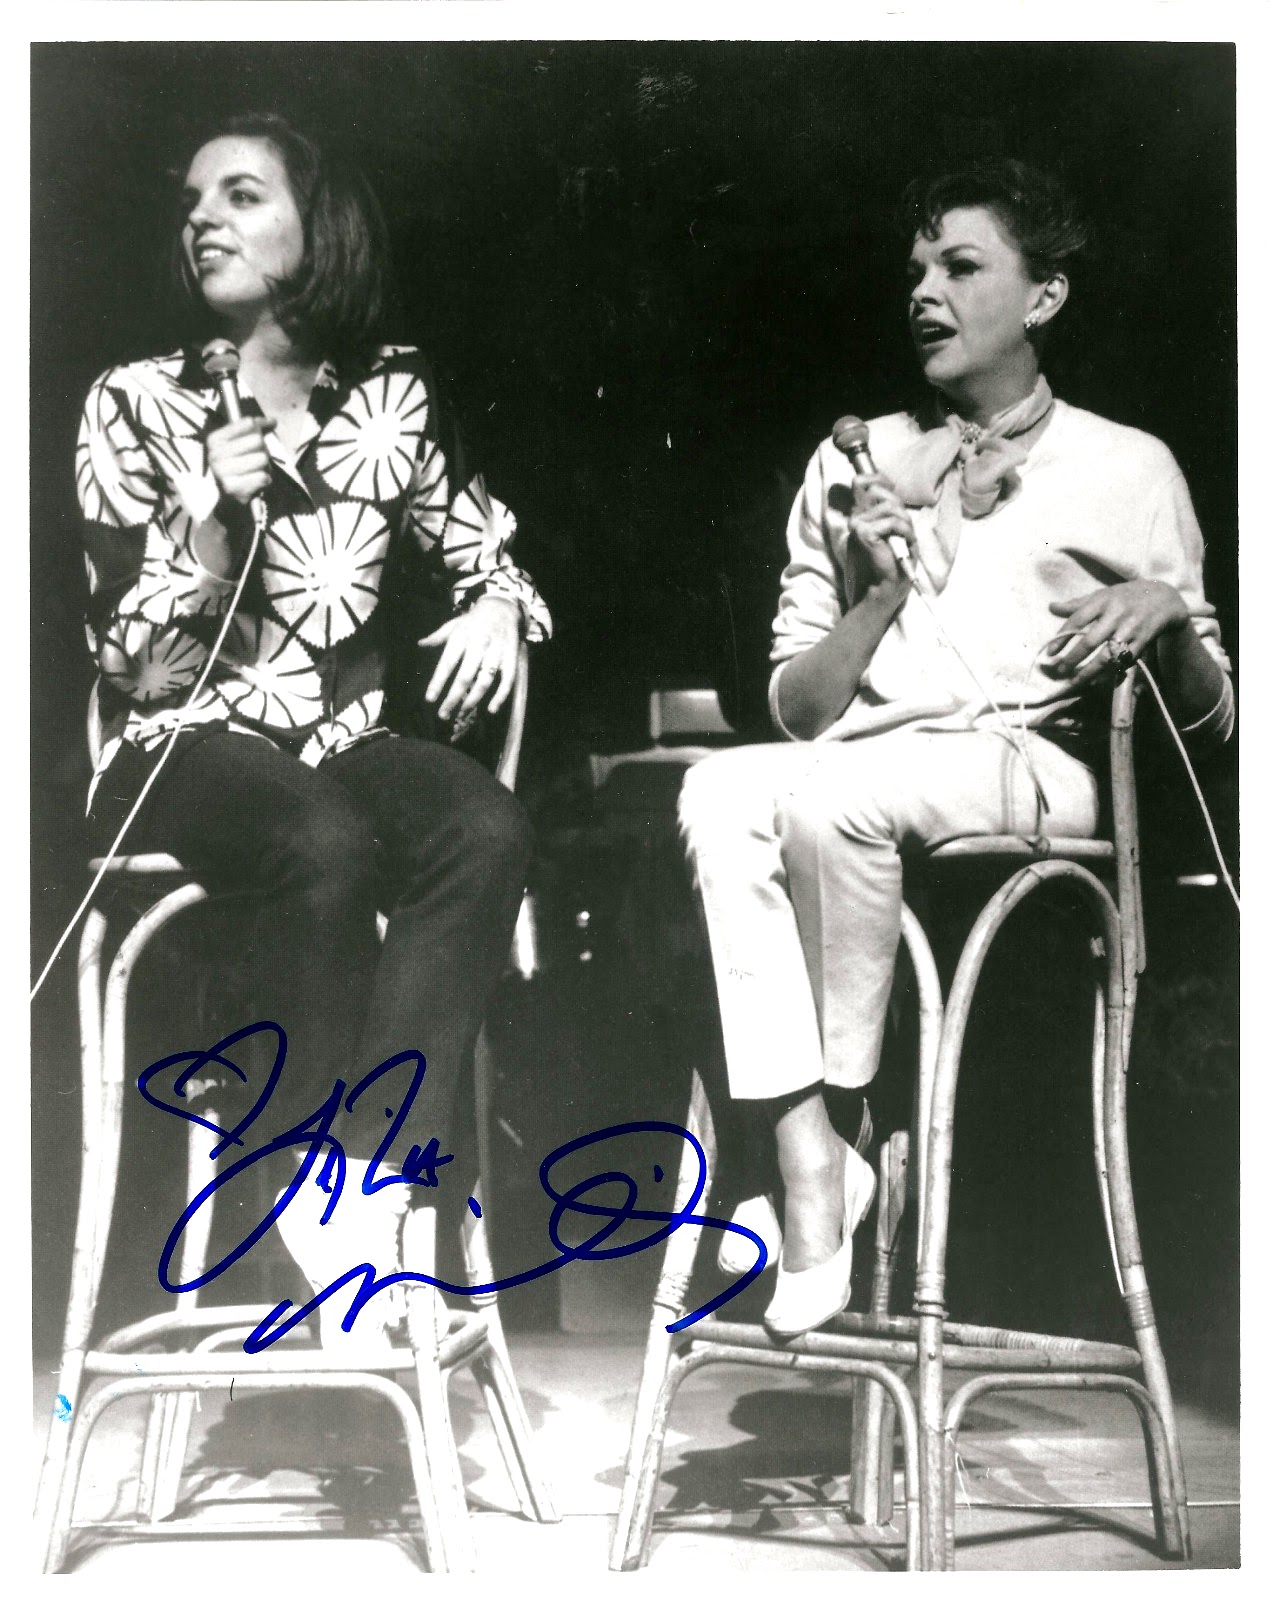 http://2.bp.blogspot.com/-ygaMEWEIrE4/UFSntCG6jpI/AAAAAAAAIlk/JrIRkjry5Fc/s1600/Liza+Minnelli+and+mother+Judy+Garland+on+stage+1964.bmp